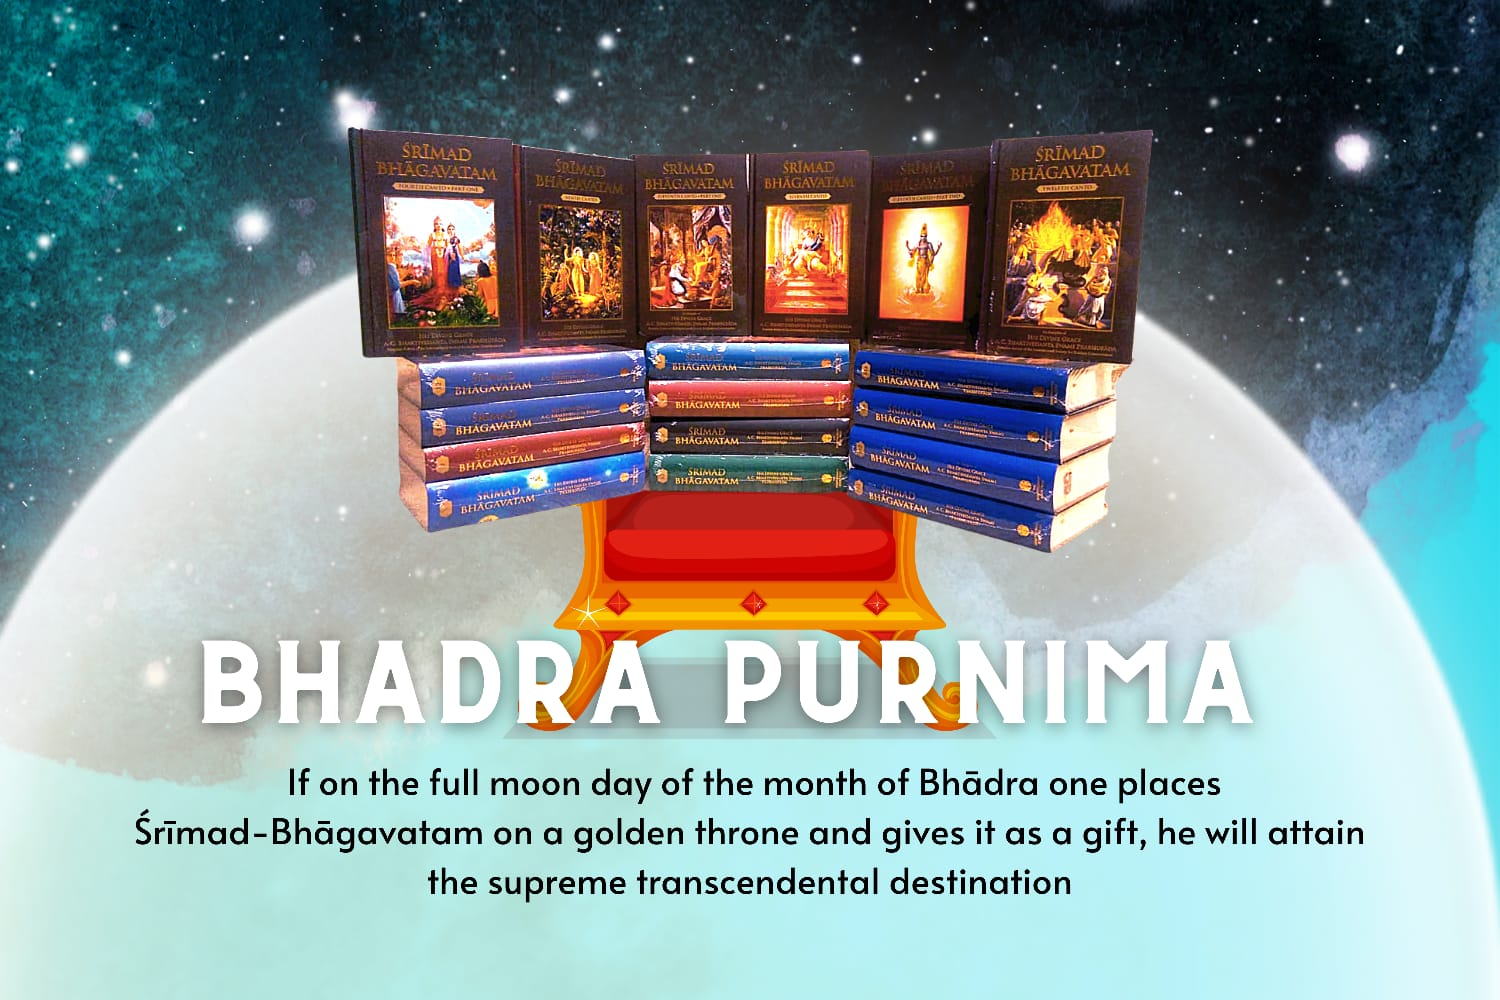 Gift Srimad Bhagavatam on Bhadra Purnima